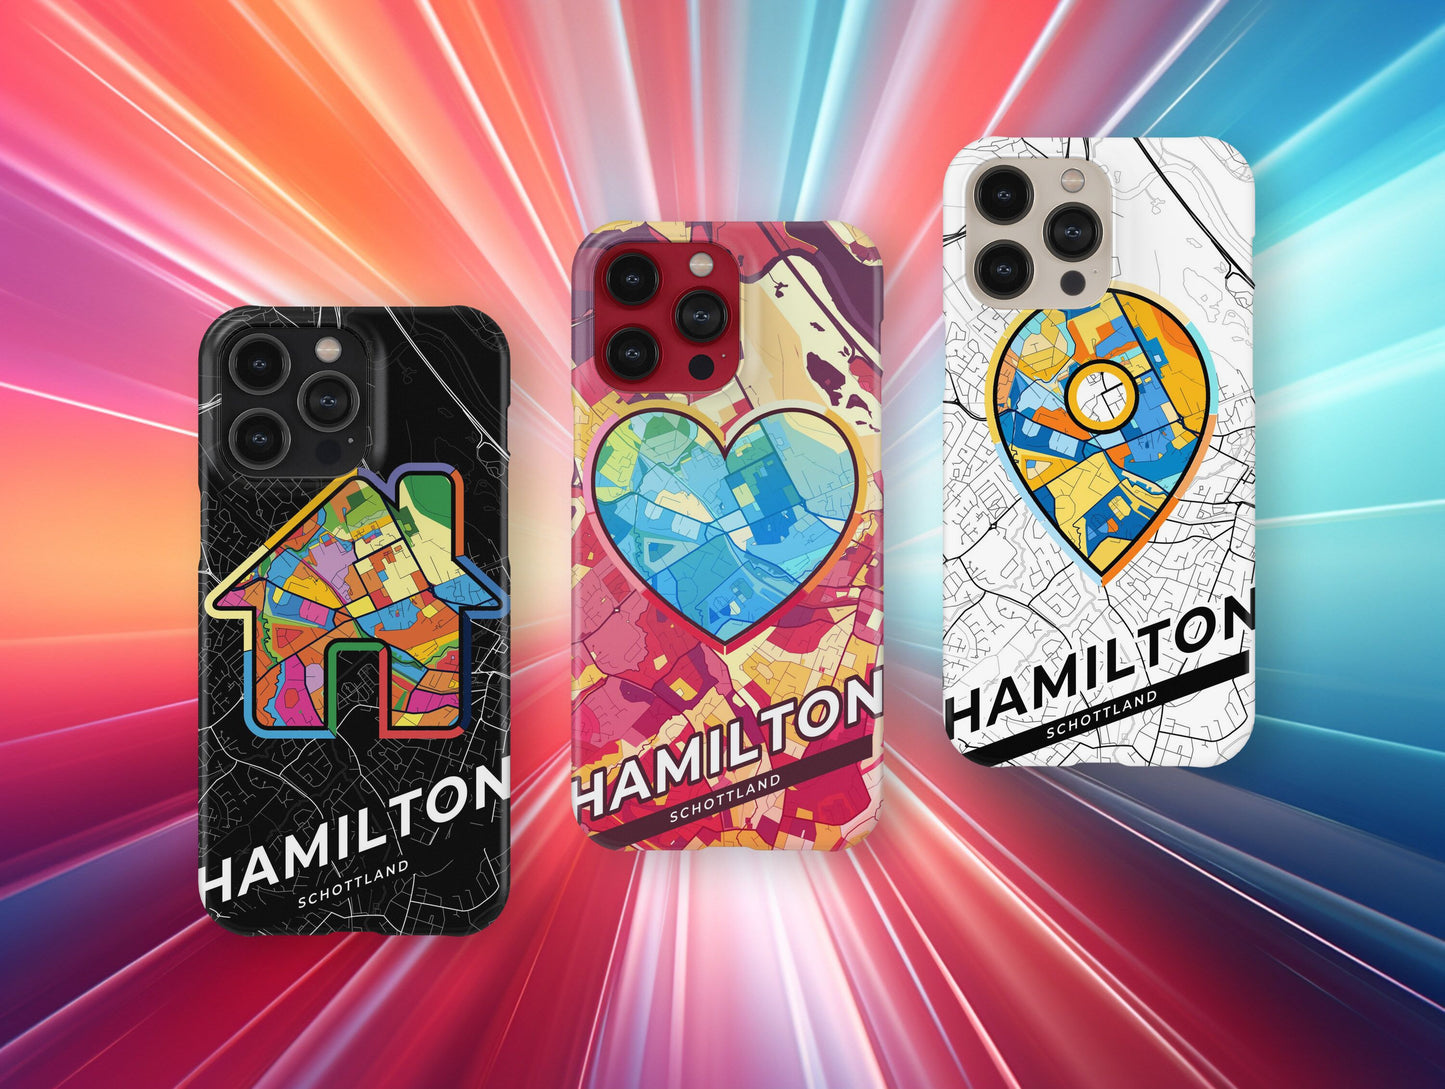 Hamilton Scotland slim phone case with colorful icon. Birthday, wedding or housewarming gift. Couple match cases.